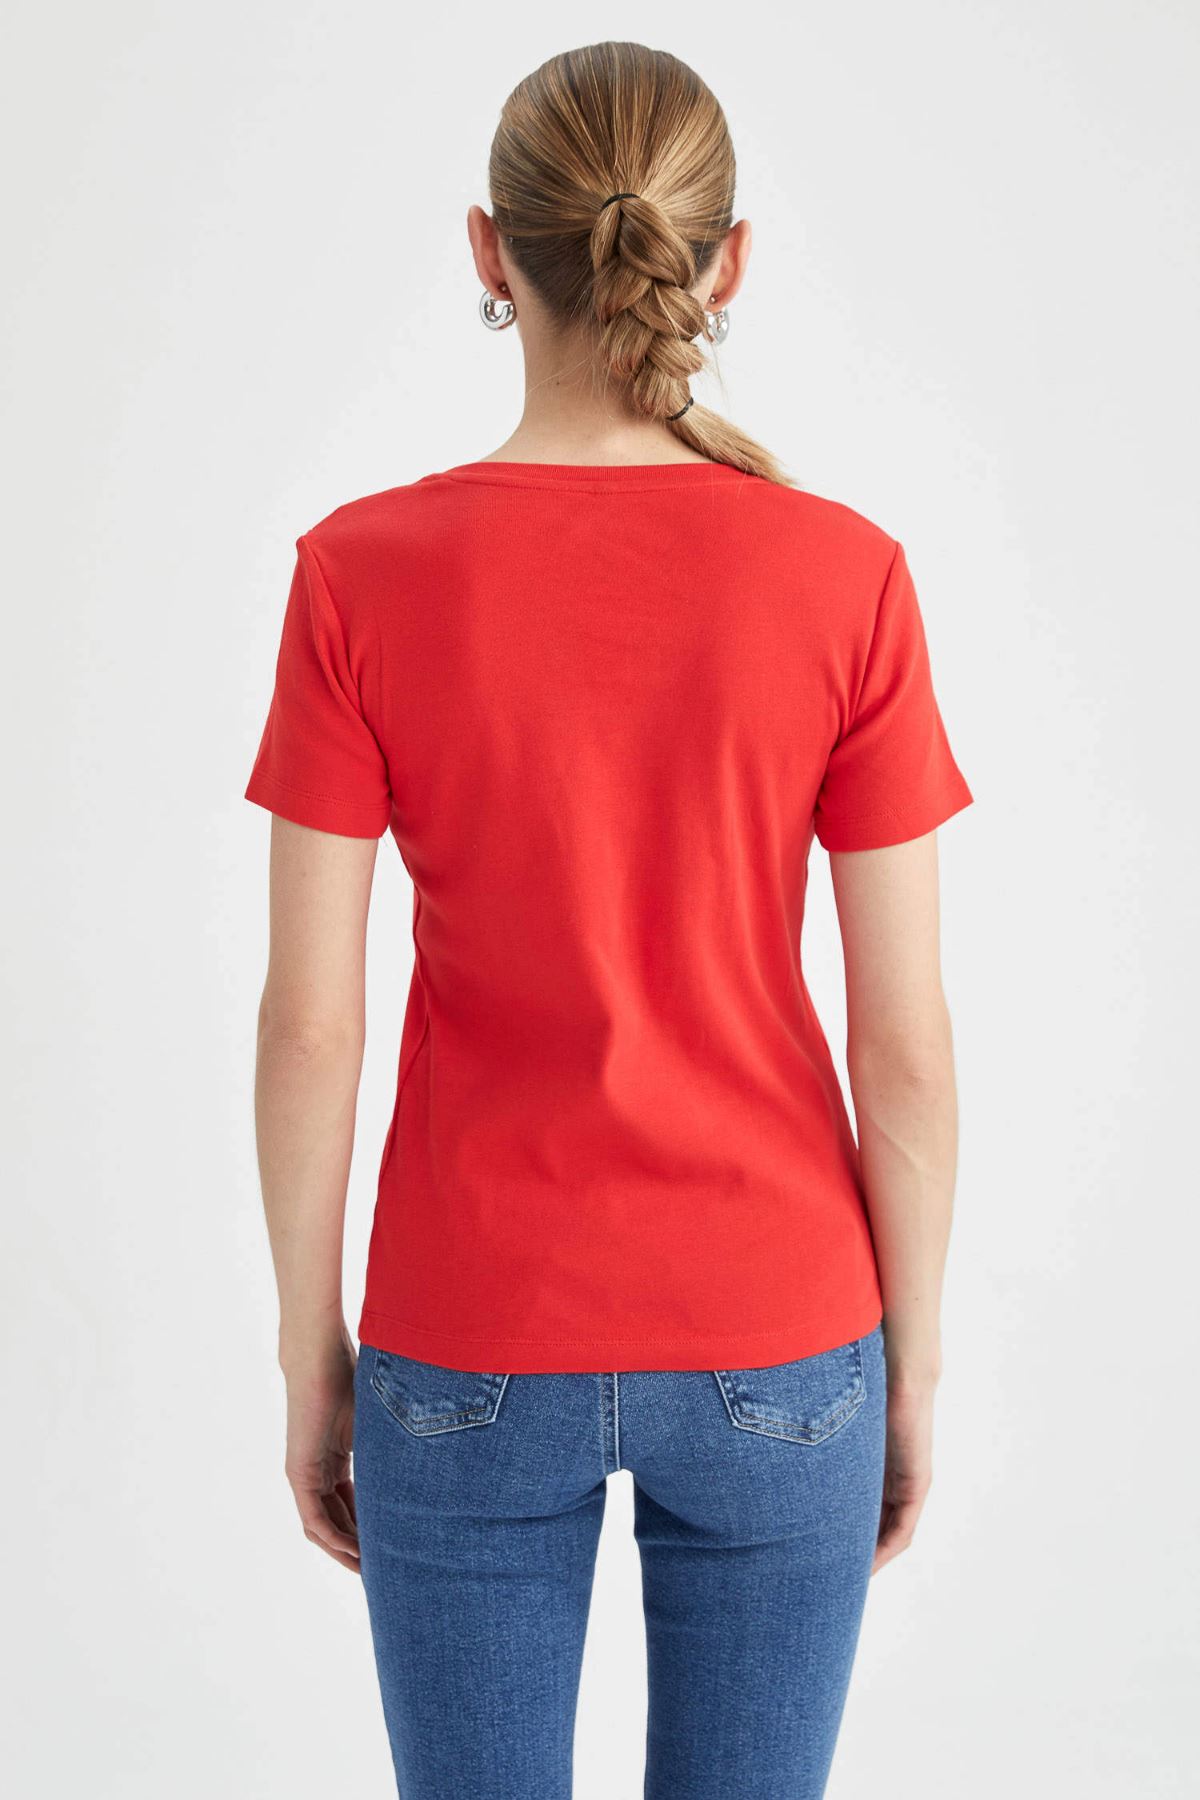 Defacto Kadın Kırmızı Tişört - I1080AZ/RD56